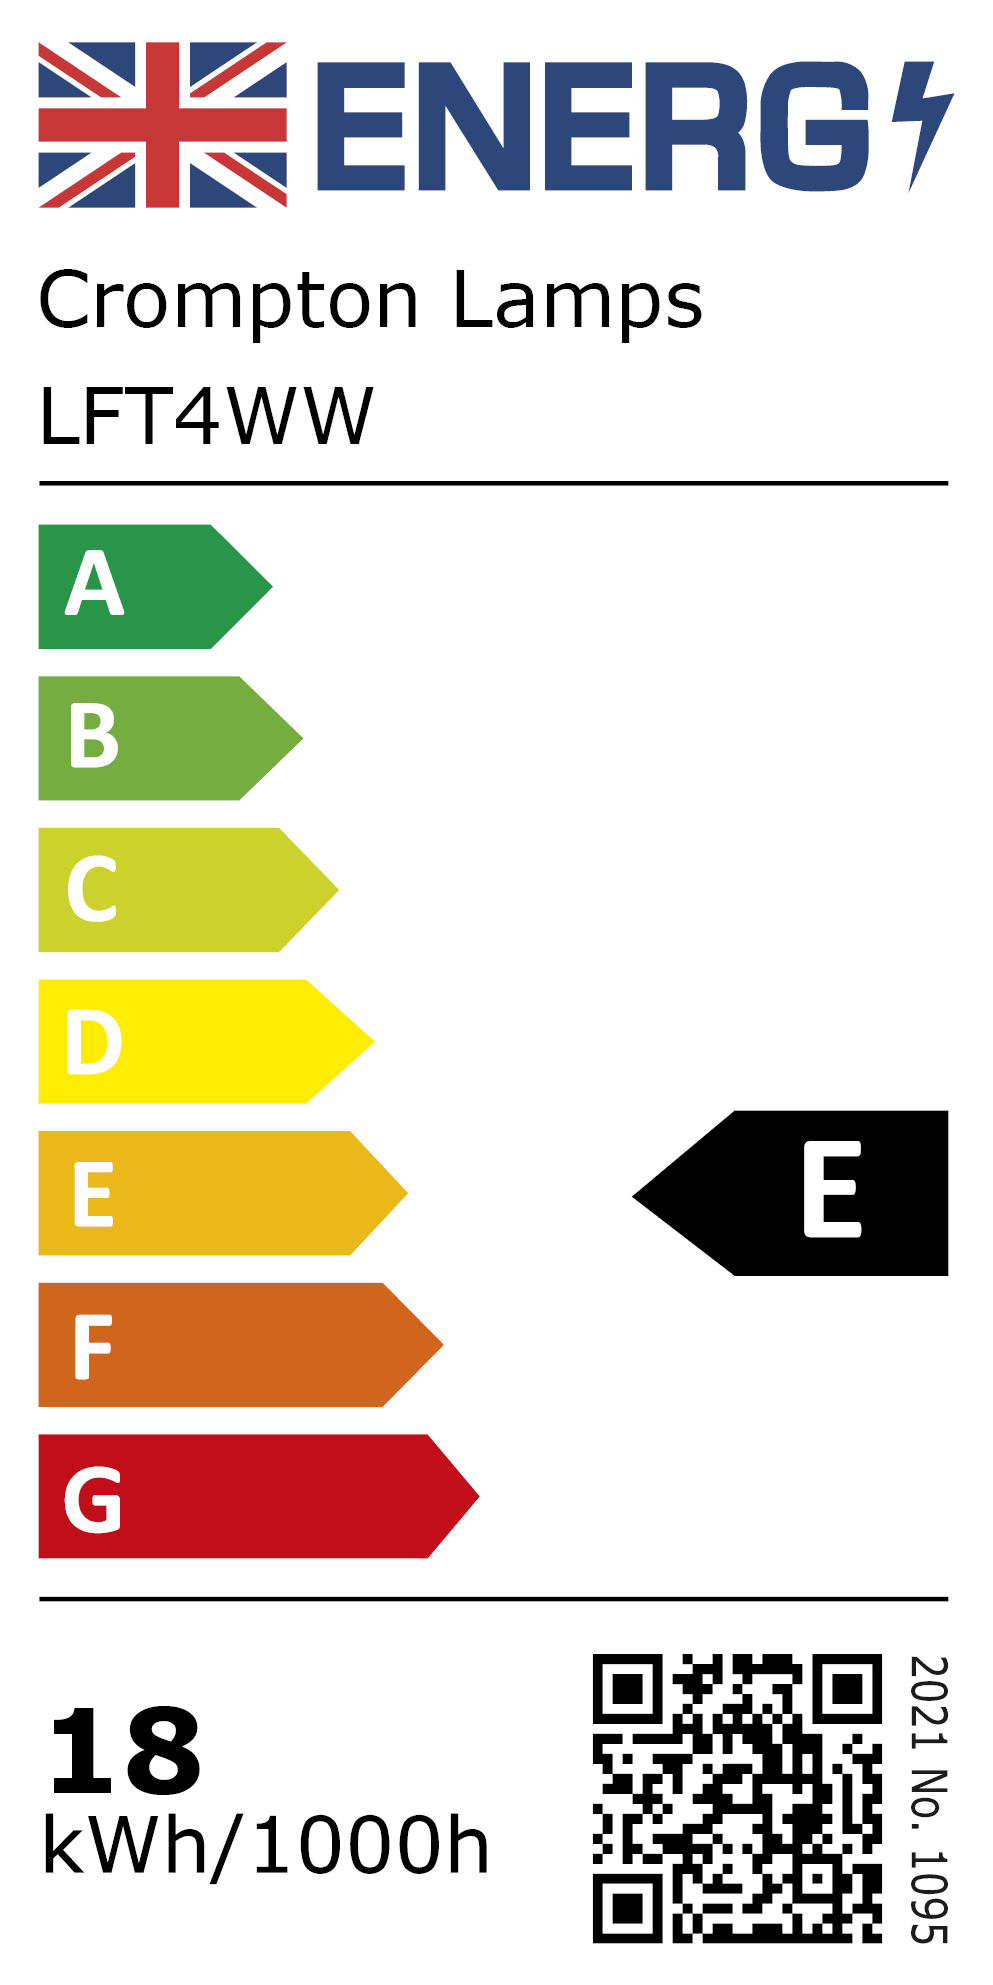 New 2021 Energy Rating Label: Stock Code LFT4WW